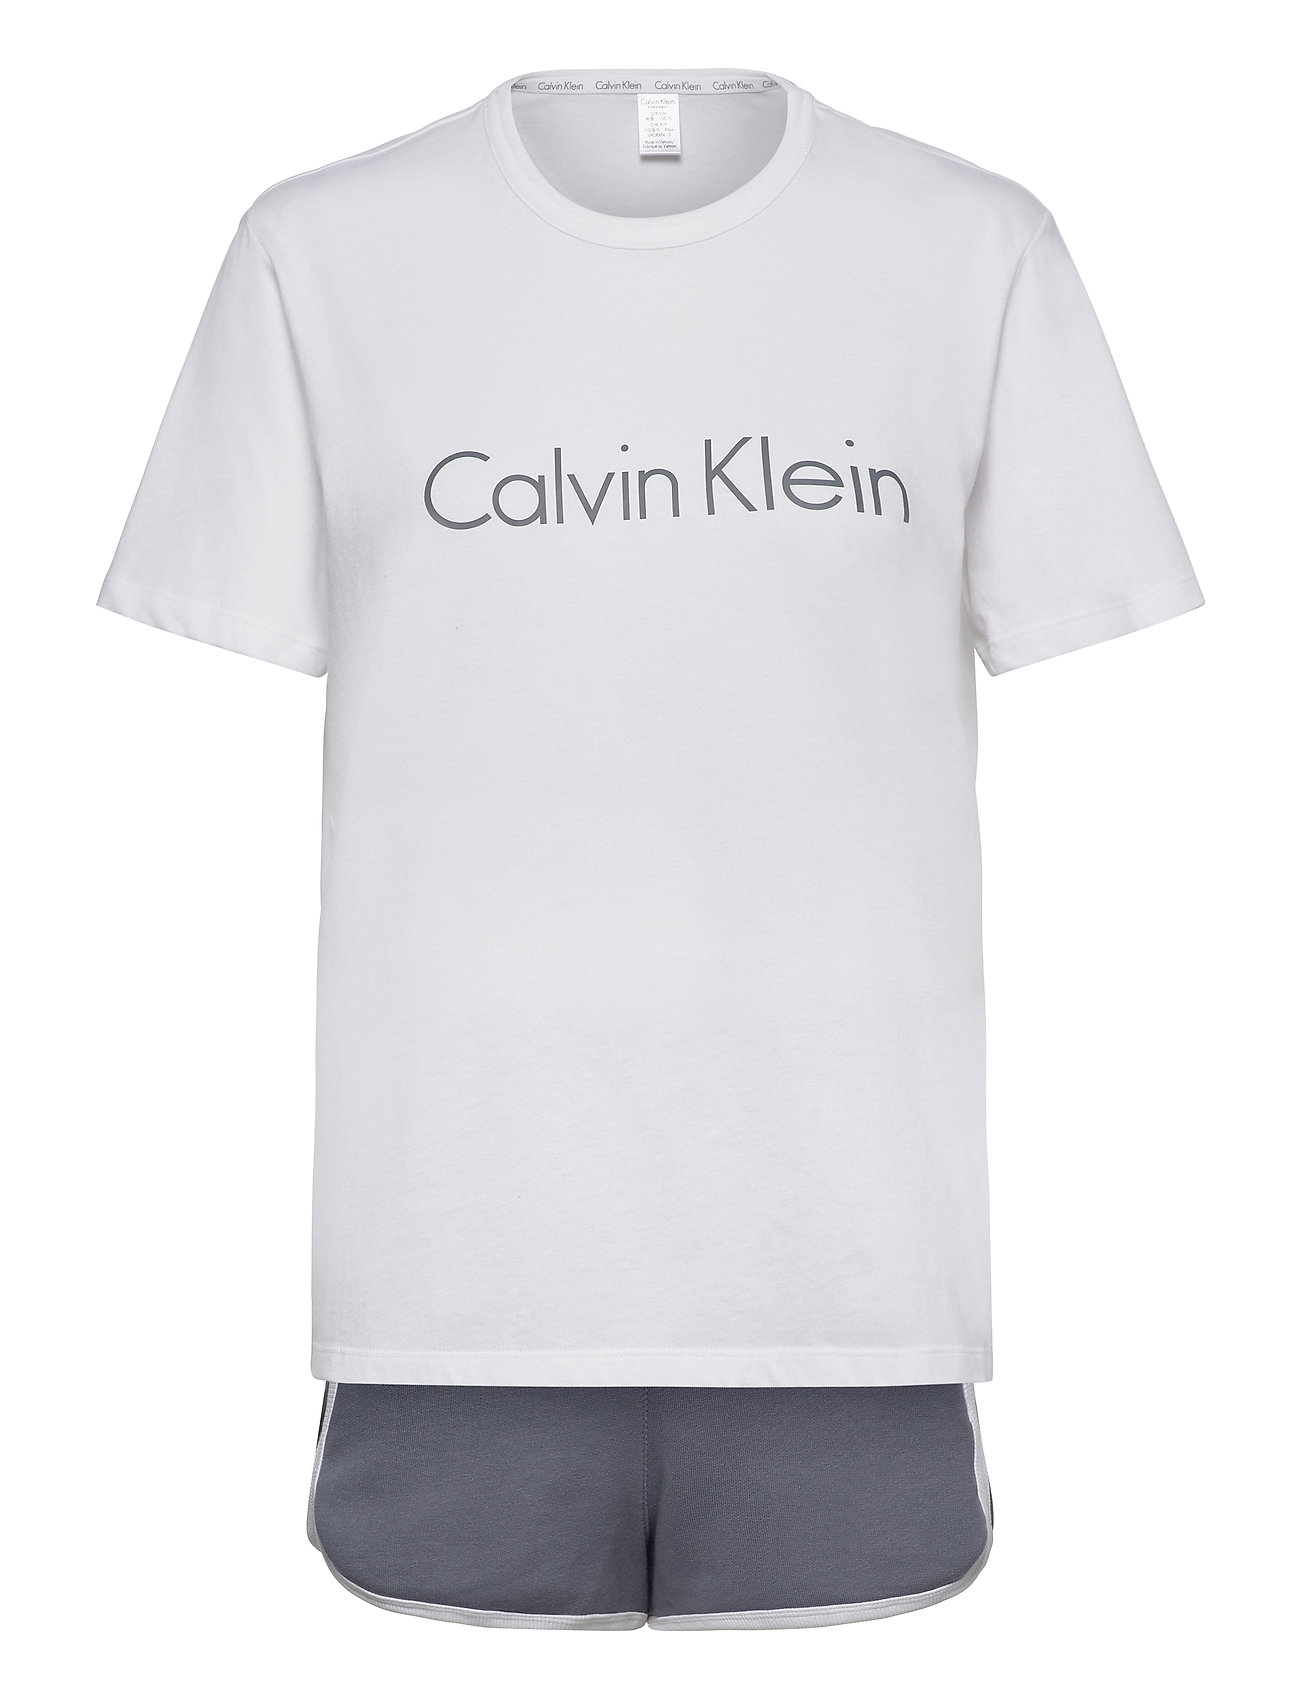 S/S Short Set Grå Calvin Klein pyjamas fra Calvin Klein til børn i Grå - Pashion.dk